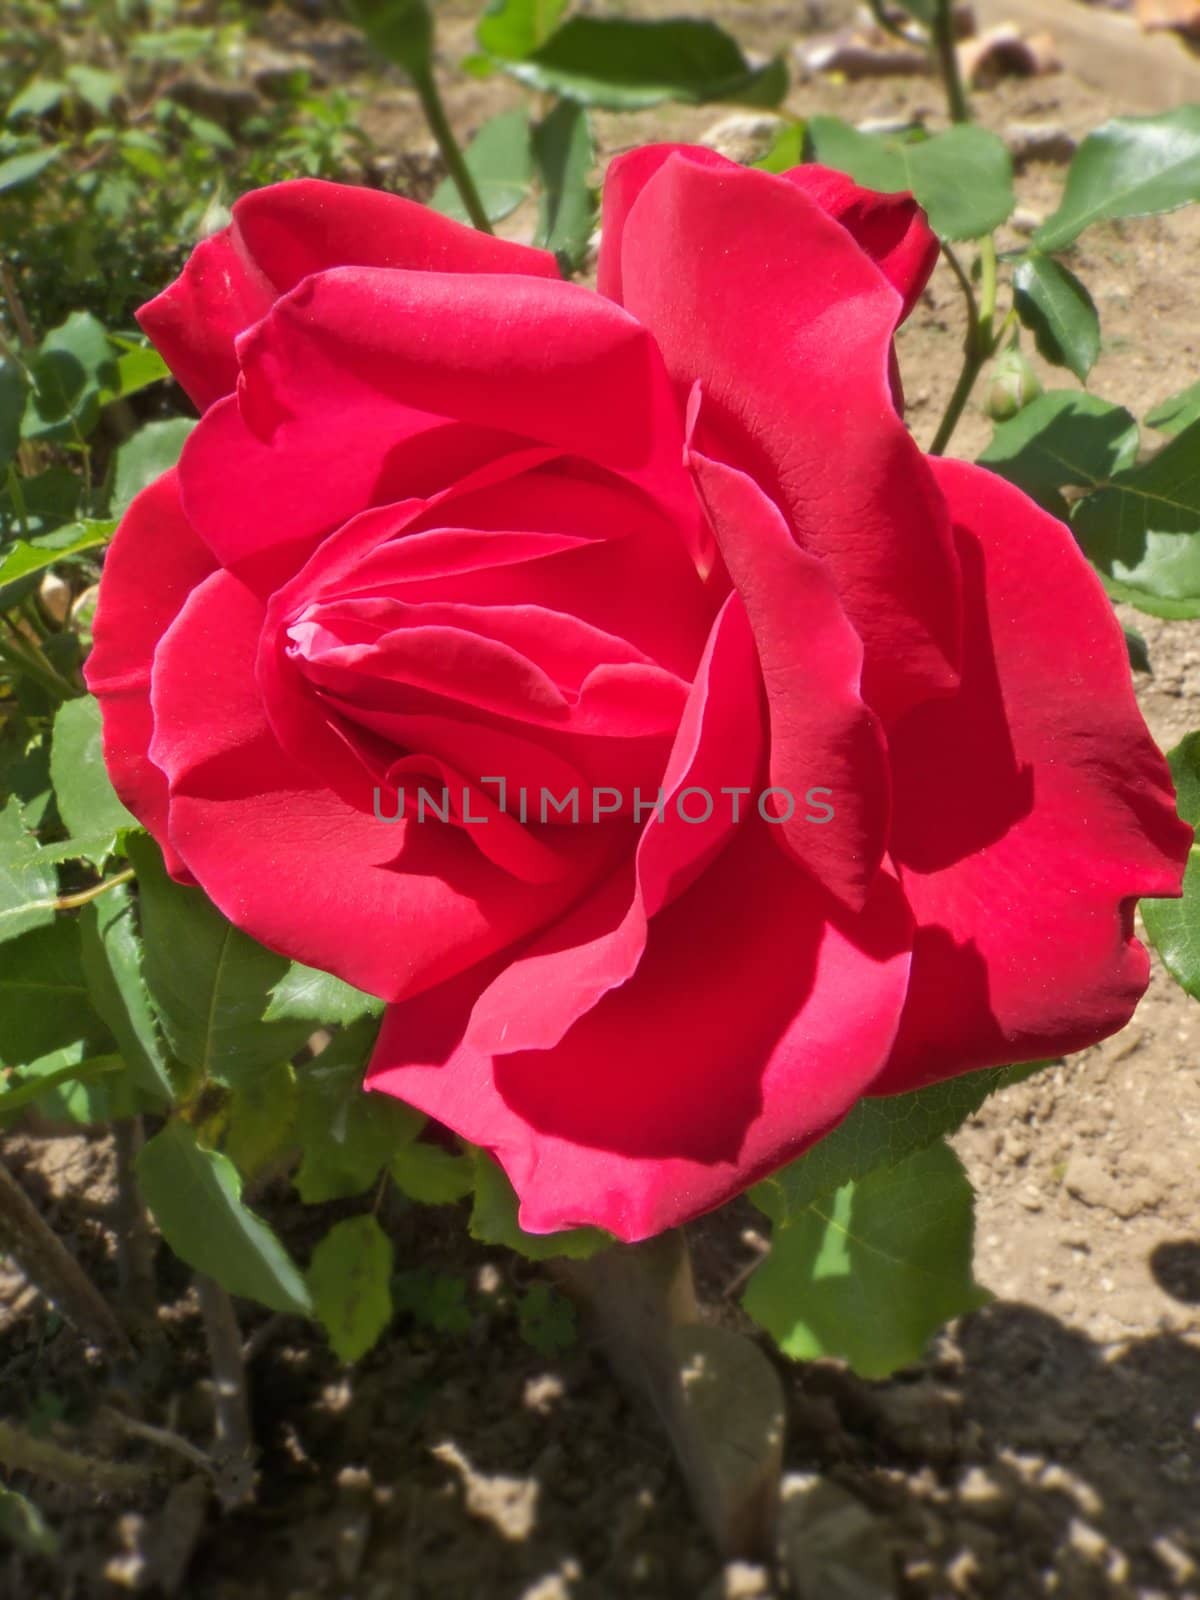 Red Rose by jbouzou